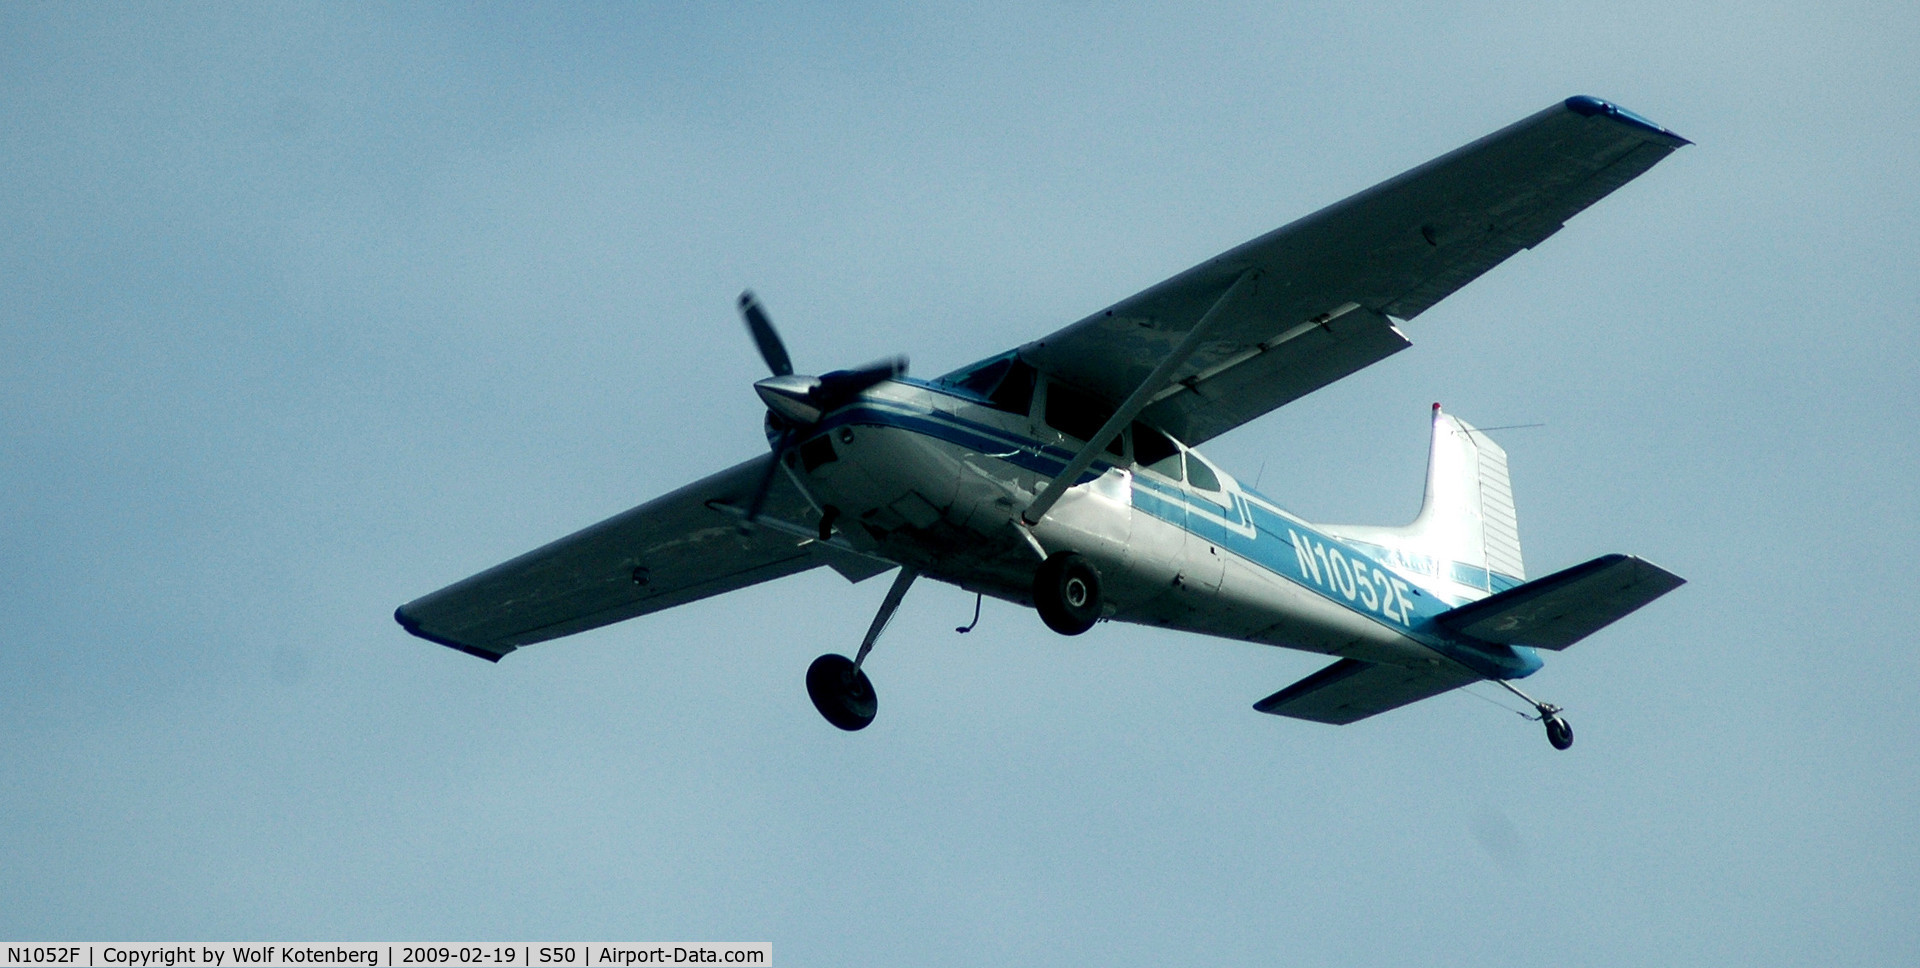 N1052F, 1975 Cessna A185F Skywagon 185 C/N 18502709, he lost his floats